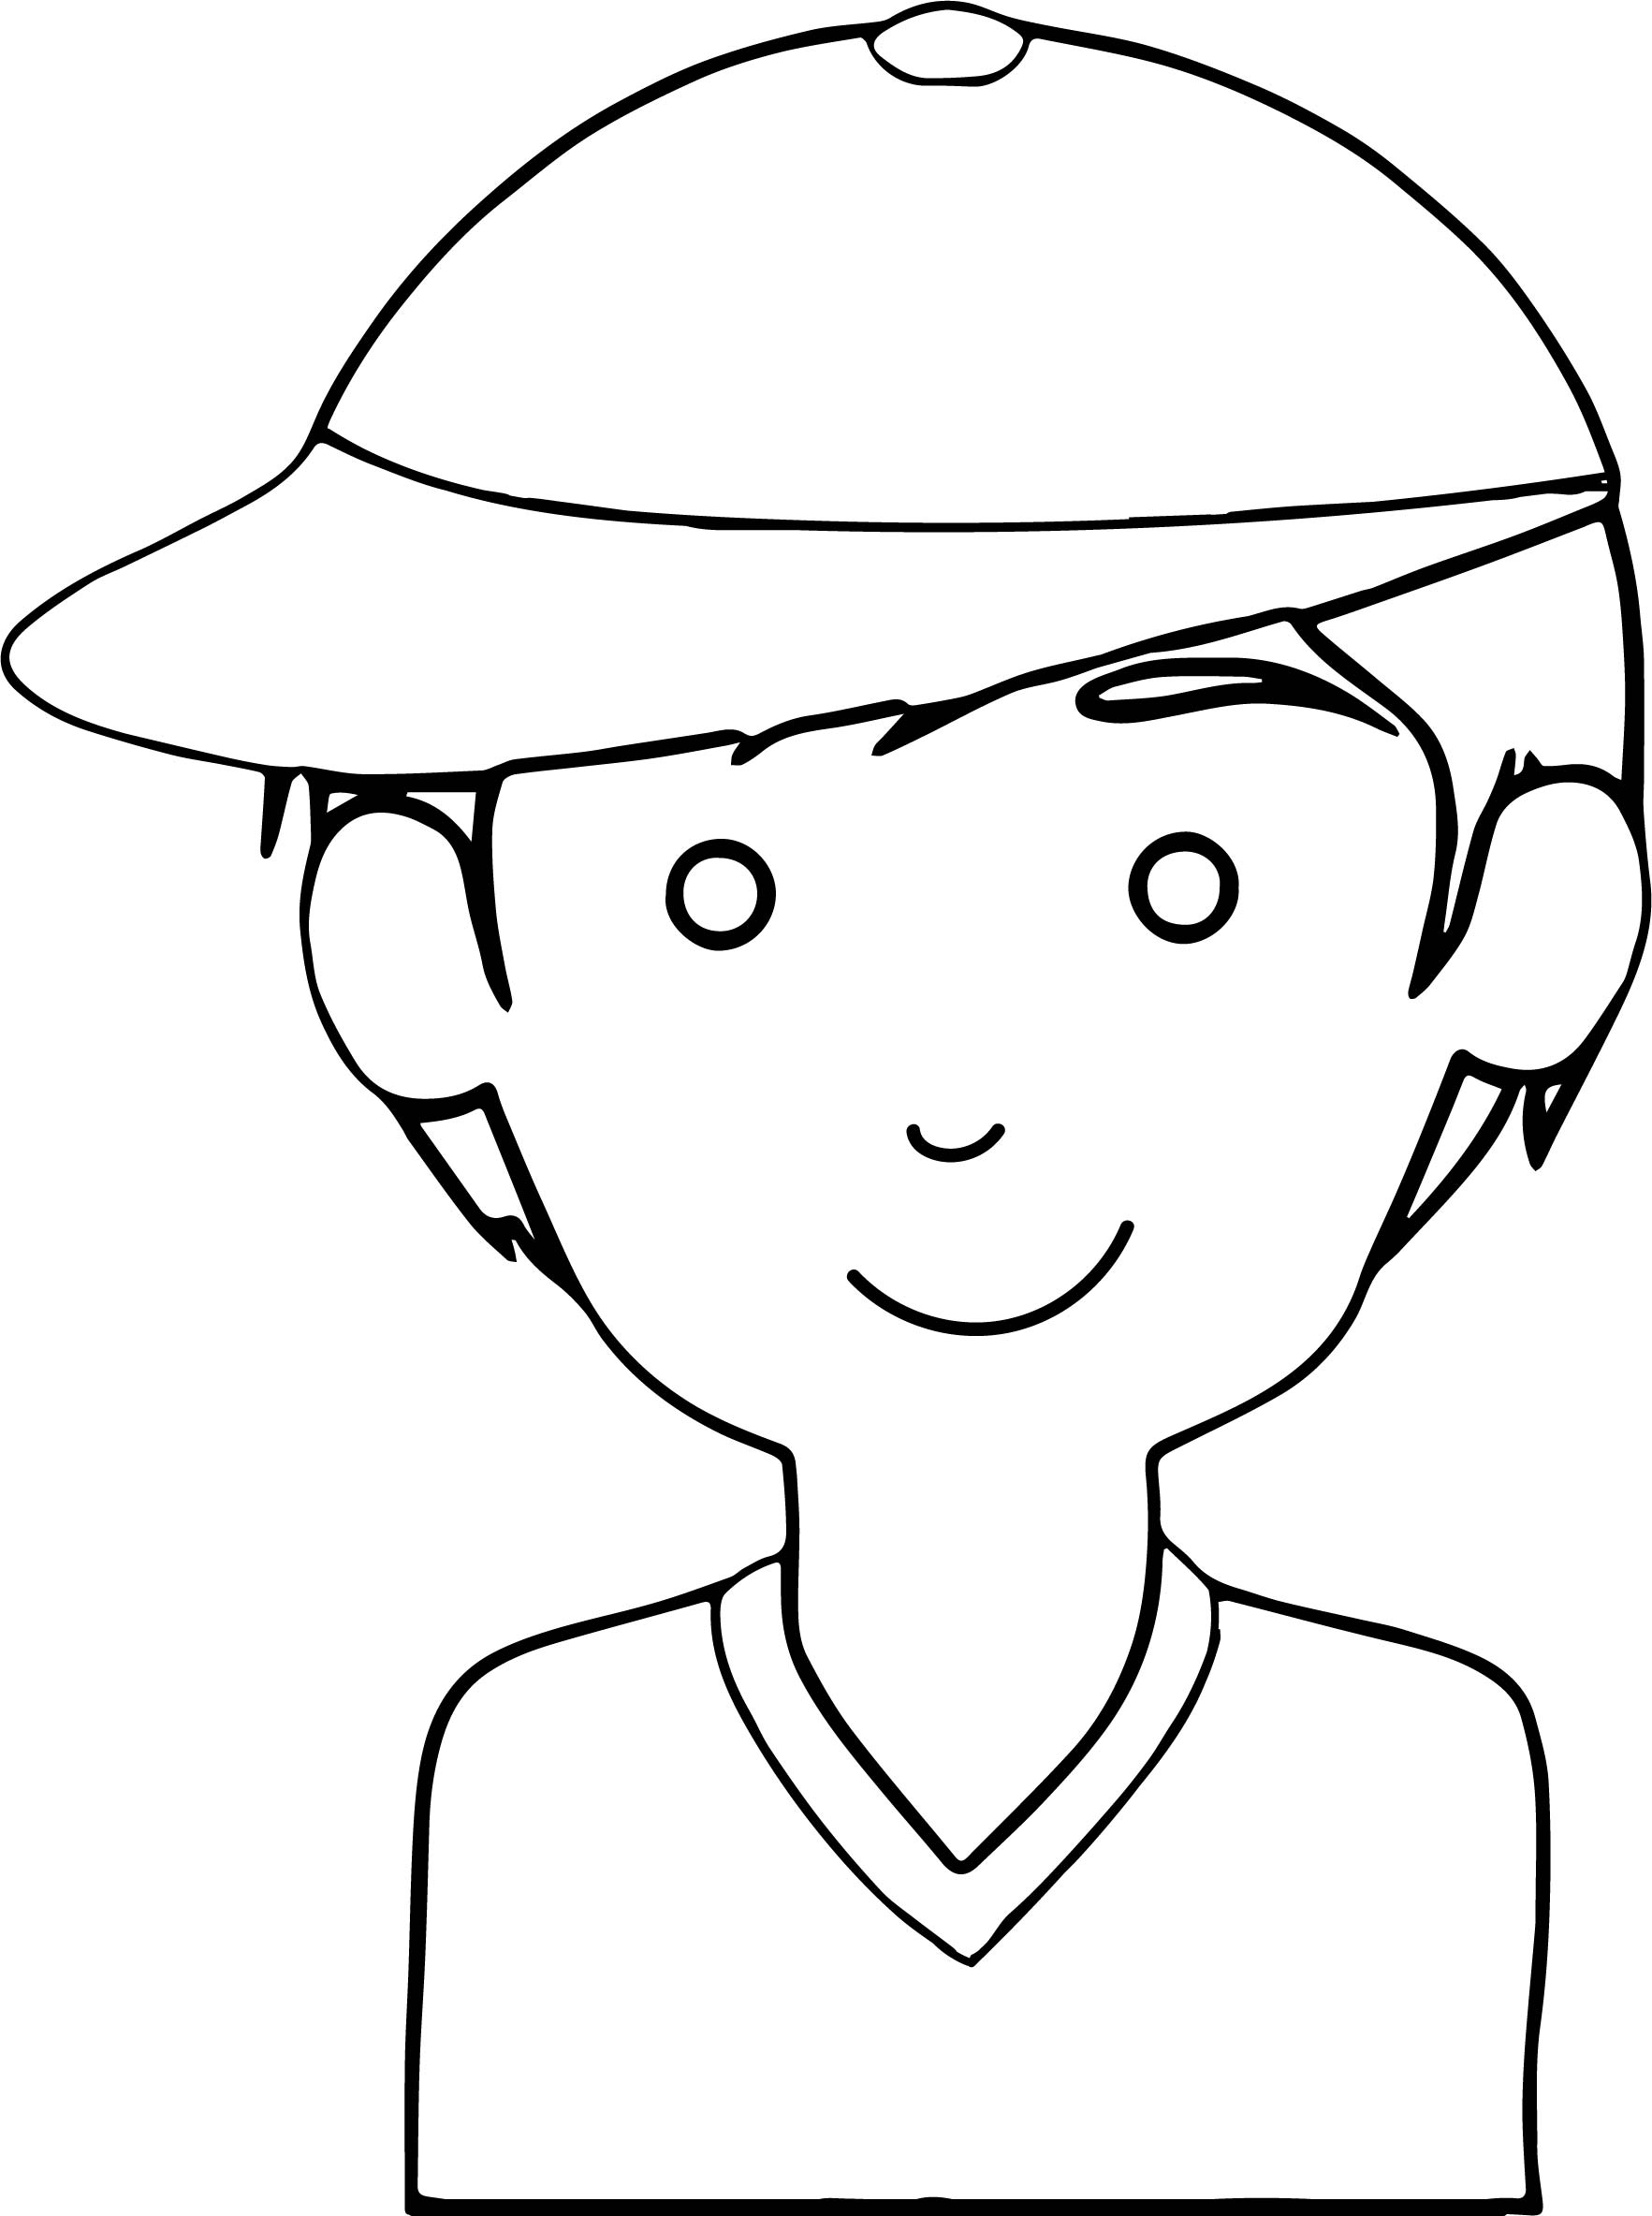 Hat Boy Coloring Page - Wecoloringpage.com